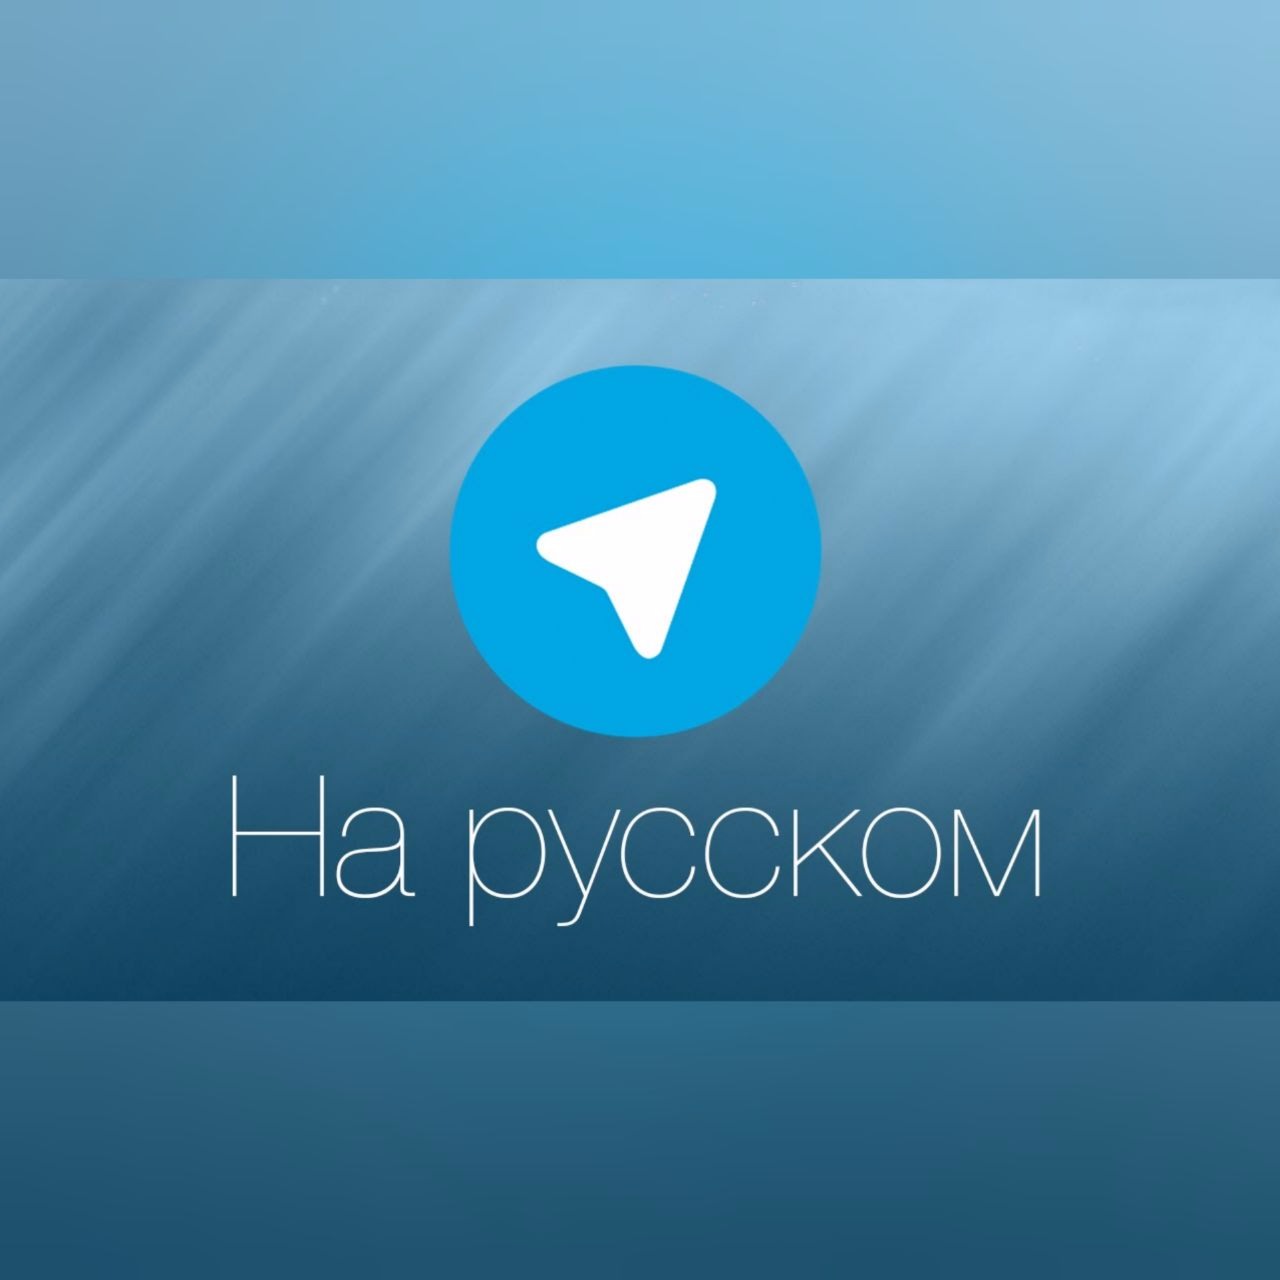 Как перевести телеграмм на русский язык андроид фото 97